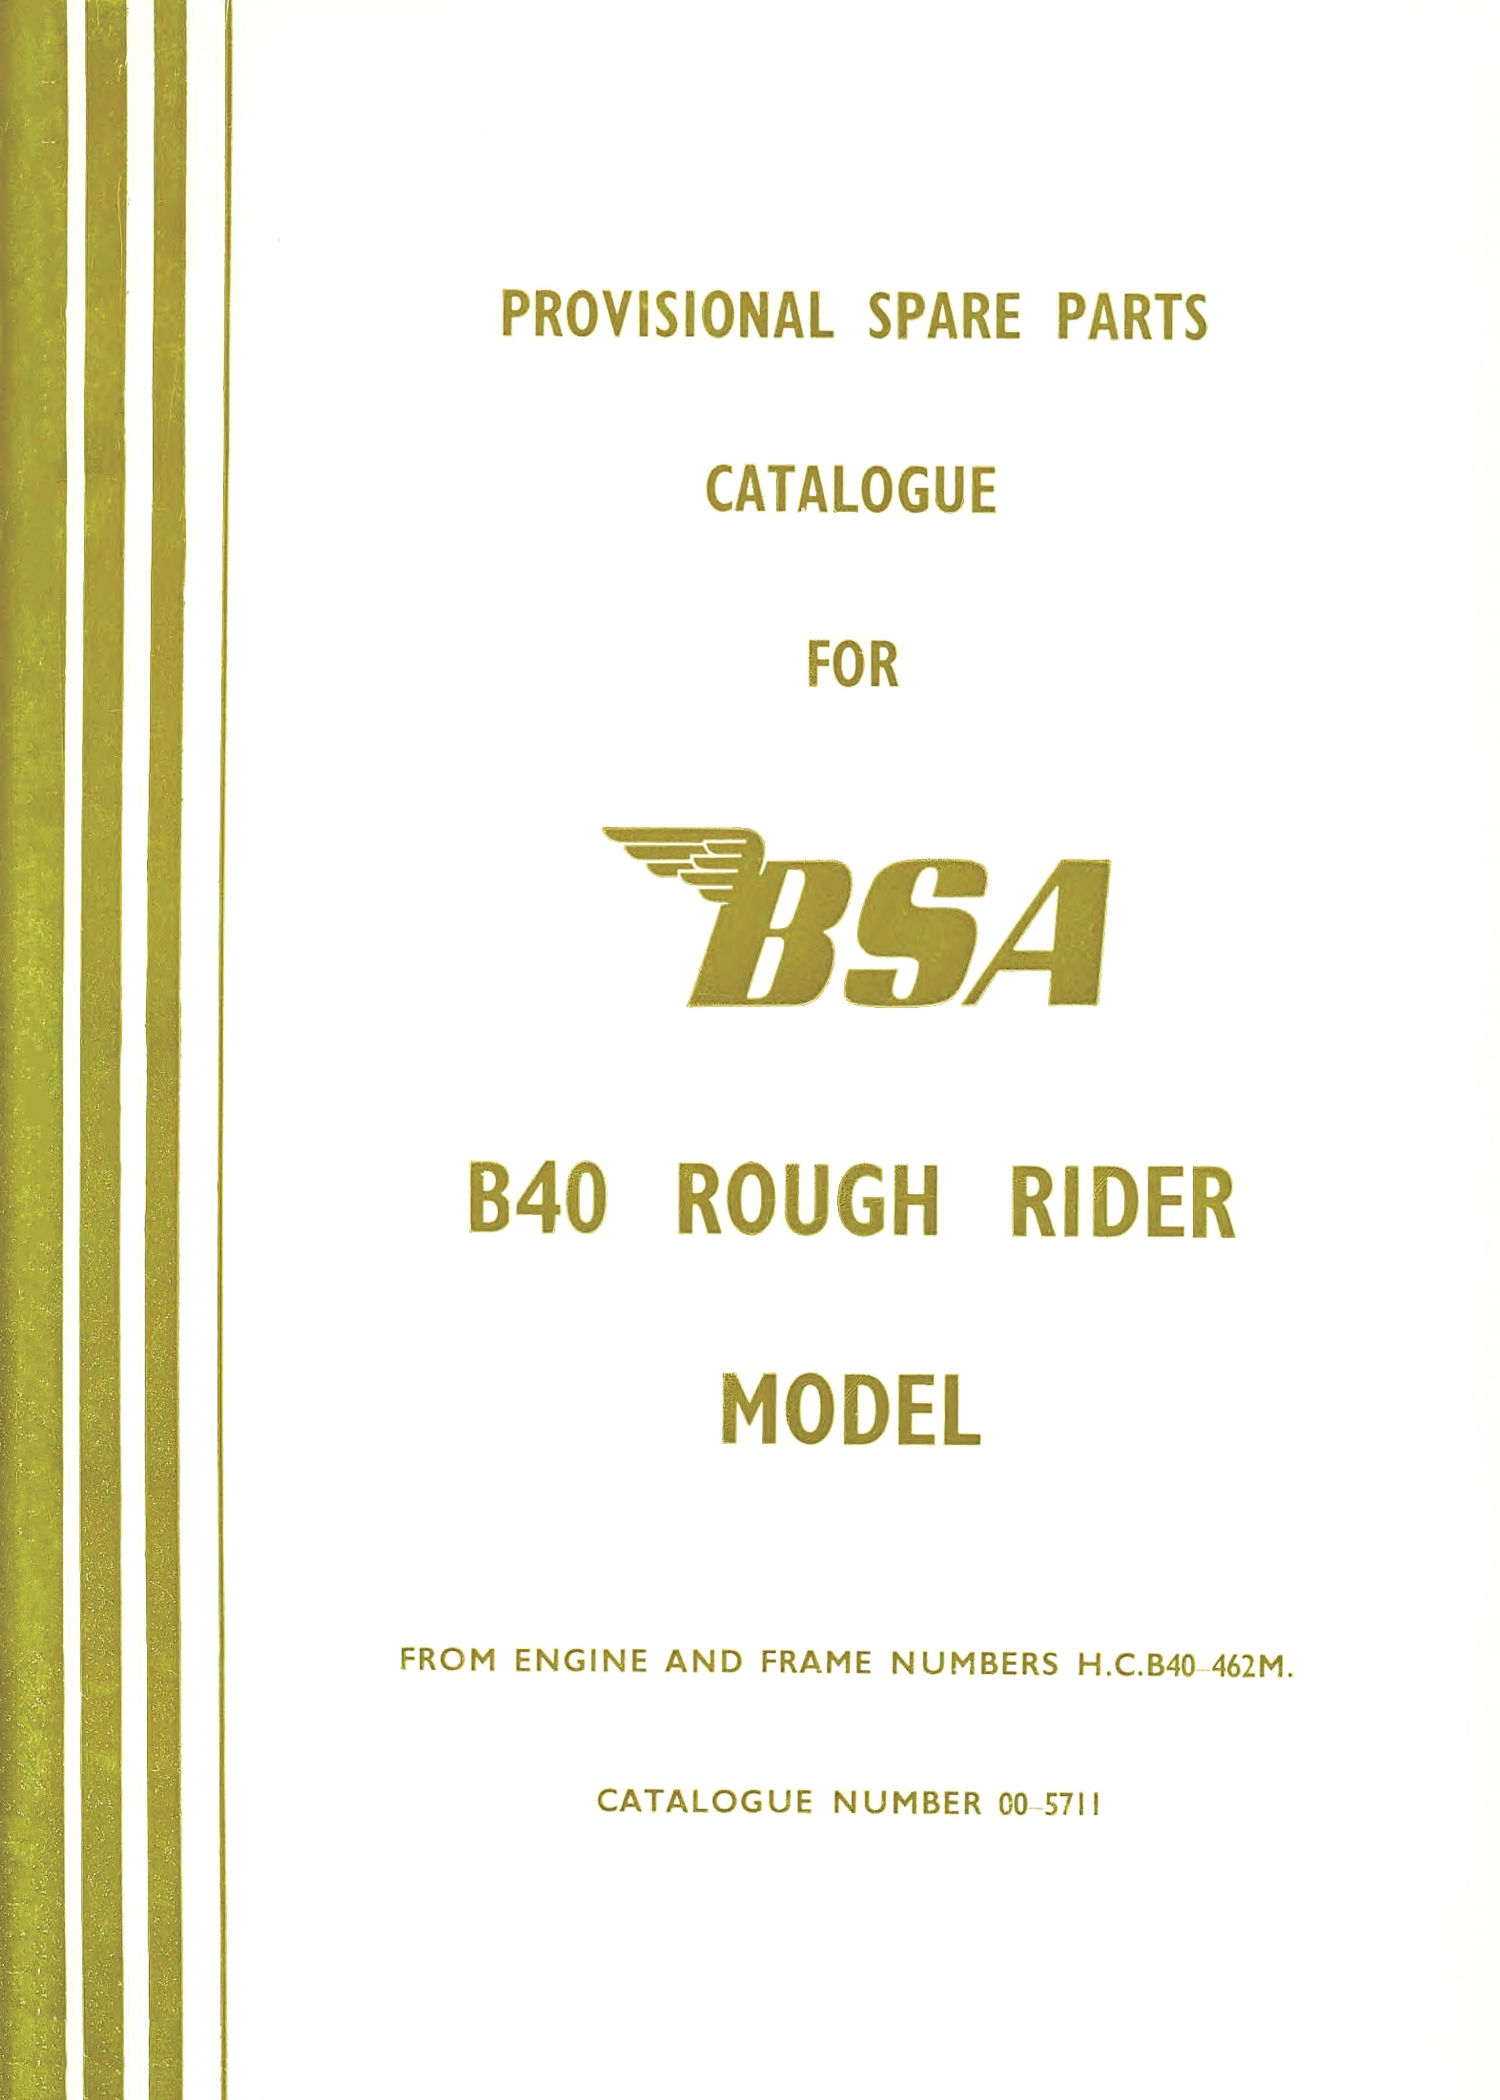 1969 BSA B40 Rough Rider Provisional Spare Parts